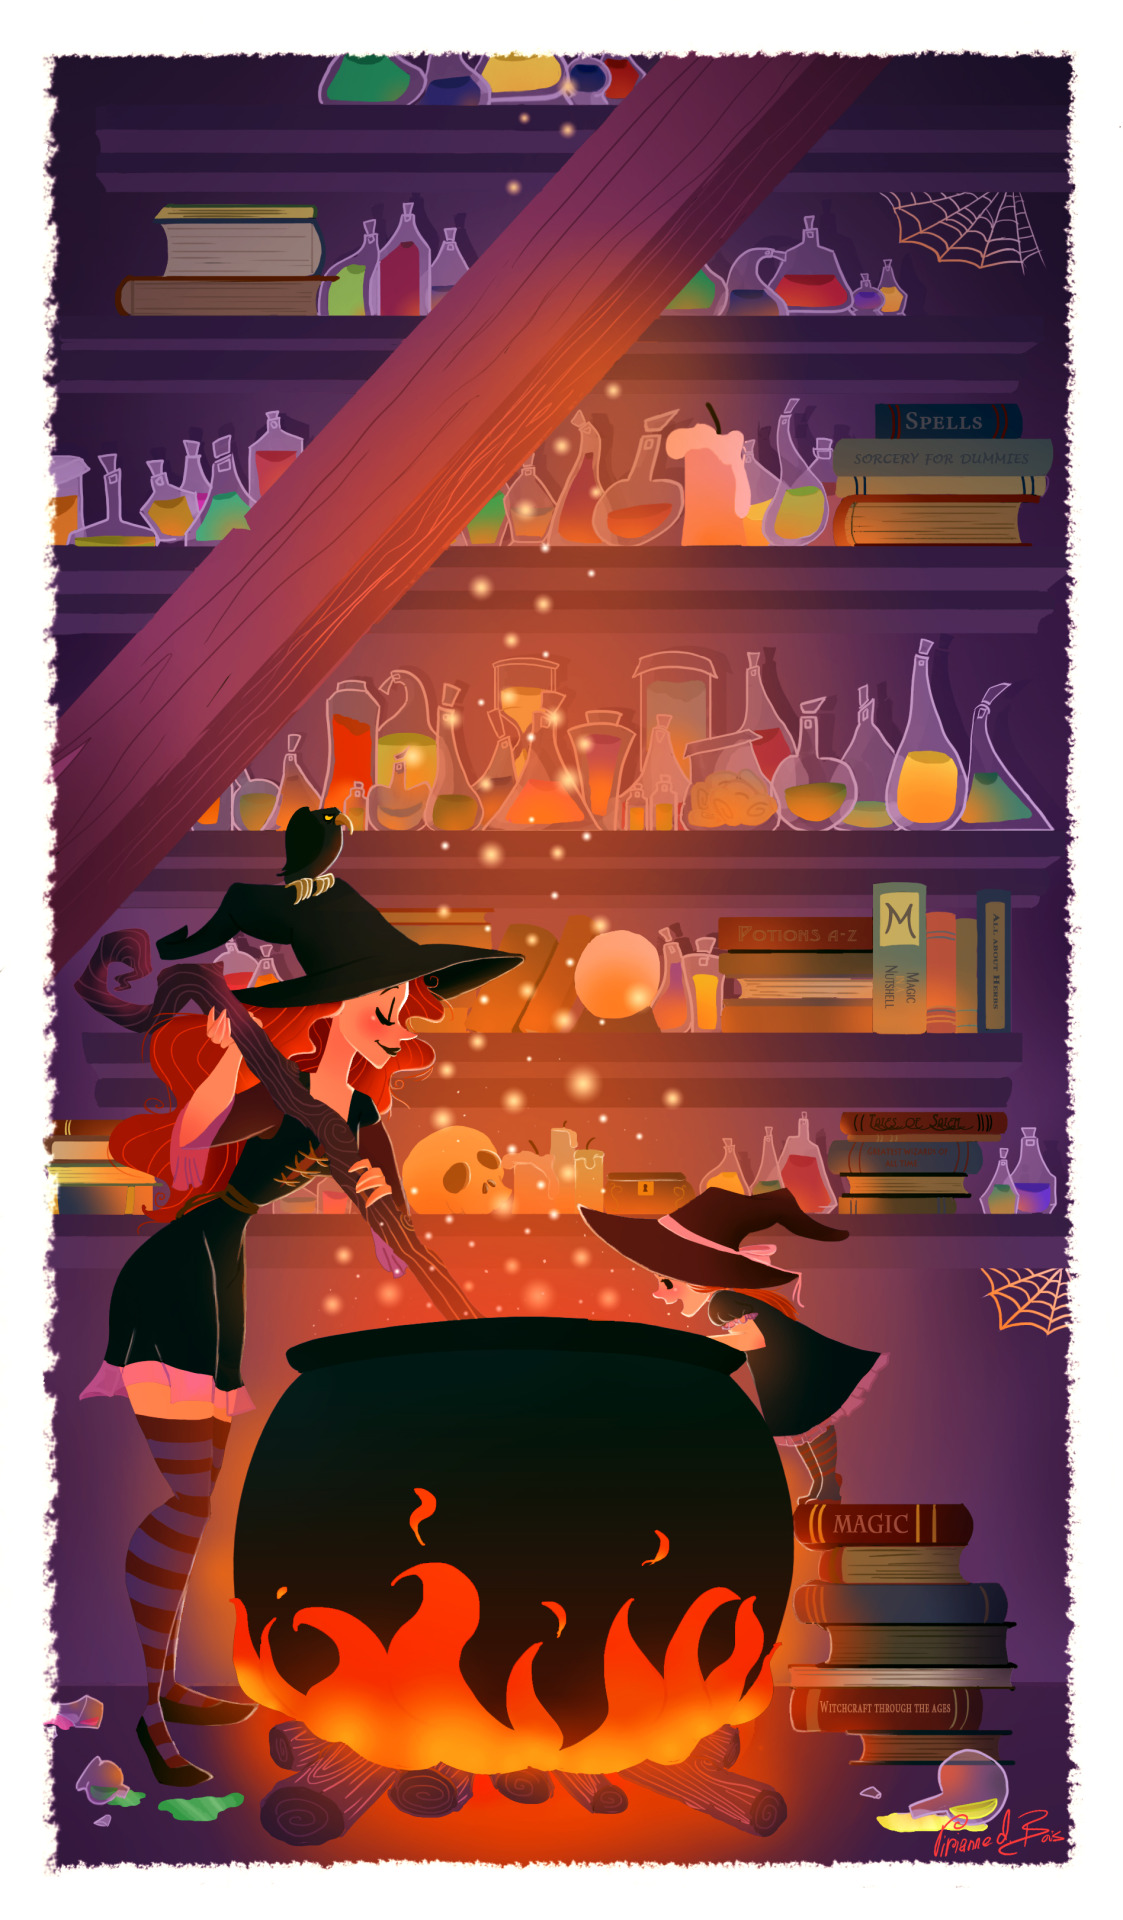 Witchcraft in progress - by Vivianne du Bois http://viviannedubois.tumblr.com